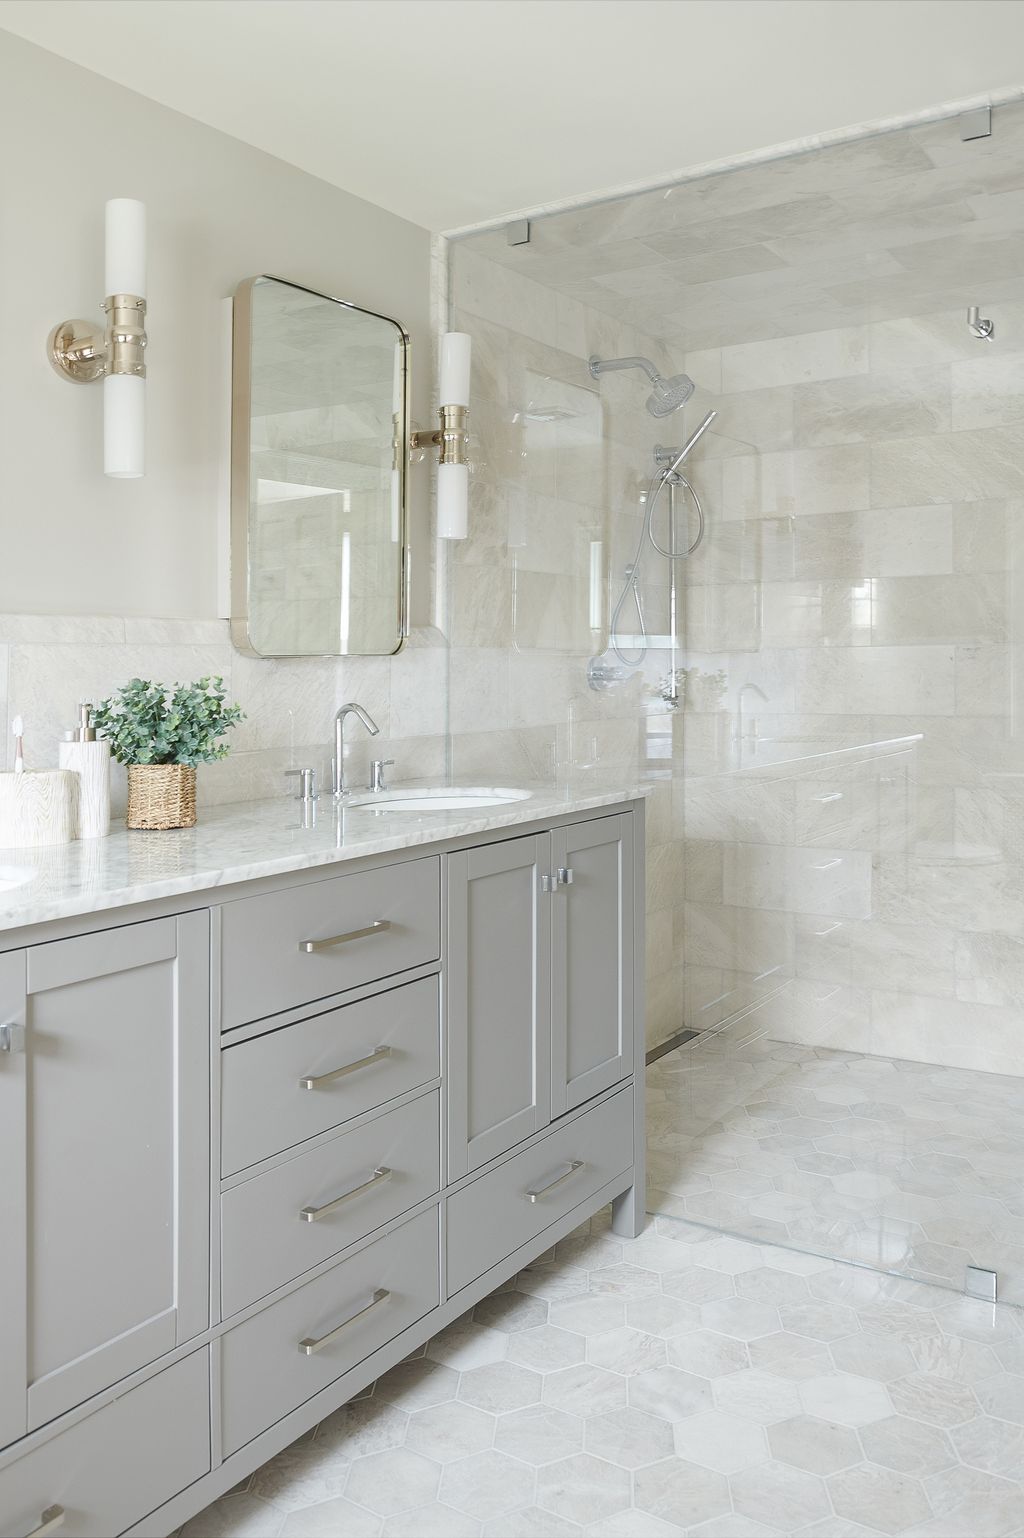 Grey and white bathroom ideas: 11 inspiring monochrome schemes